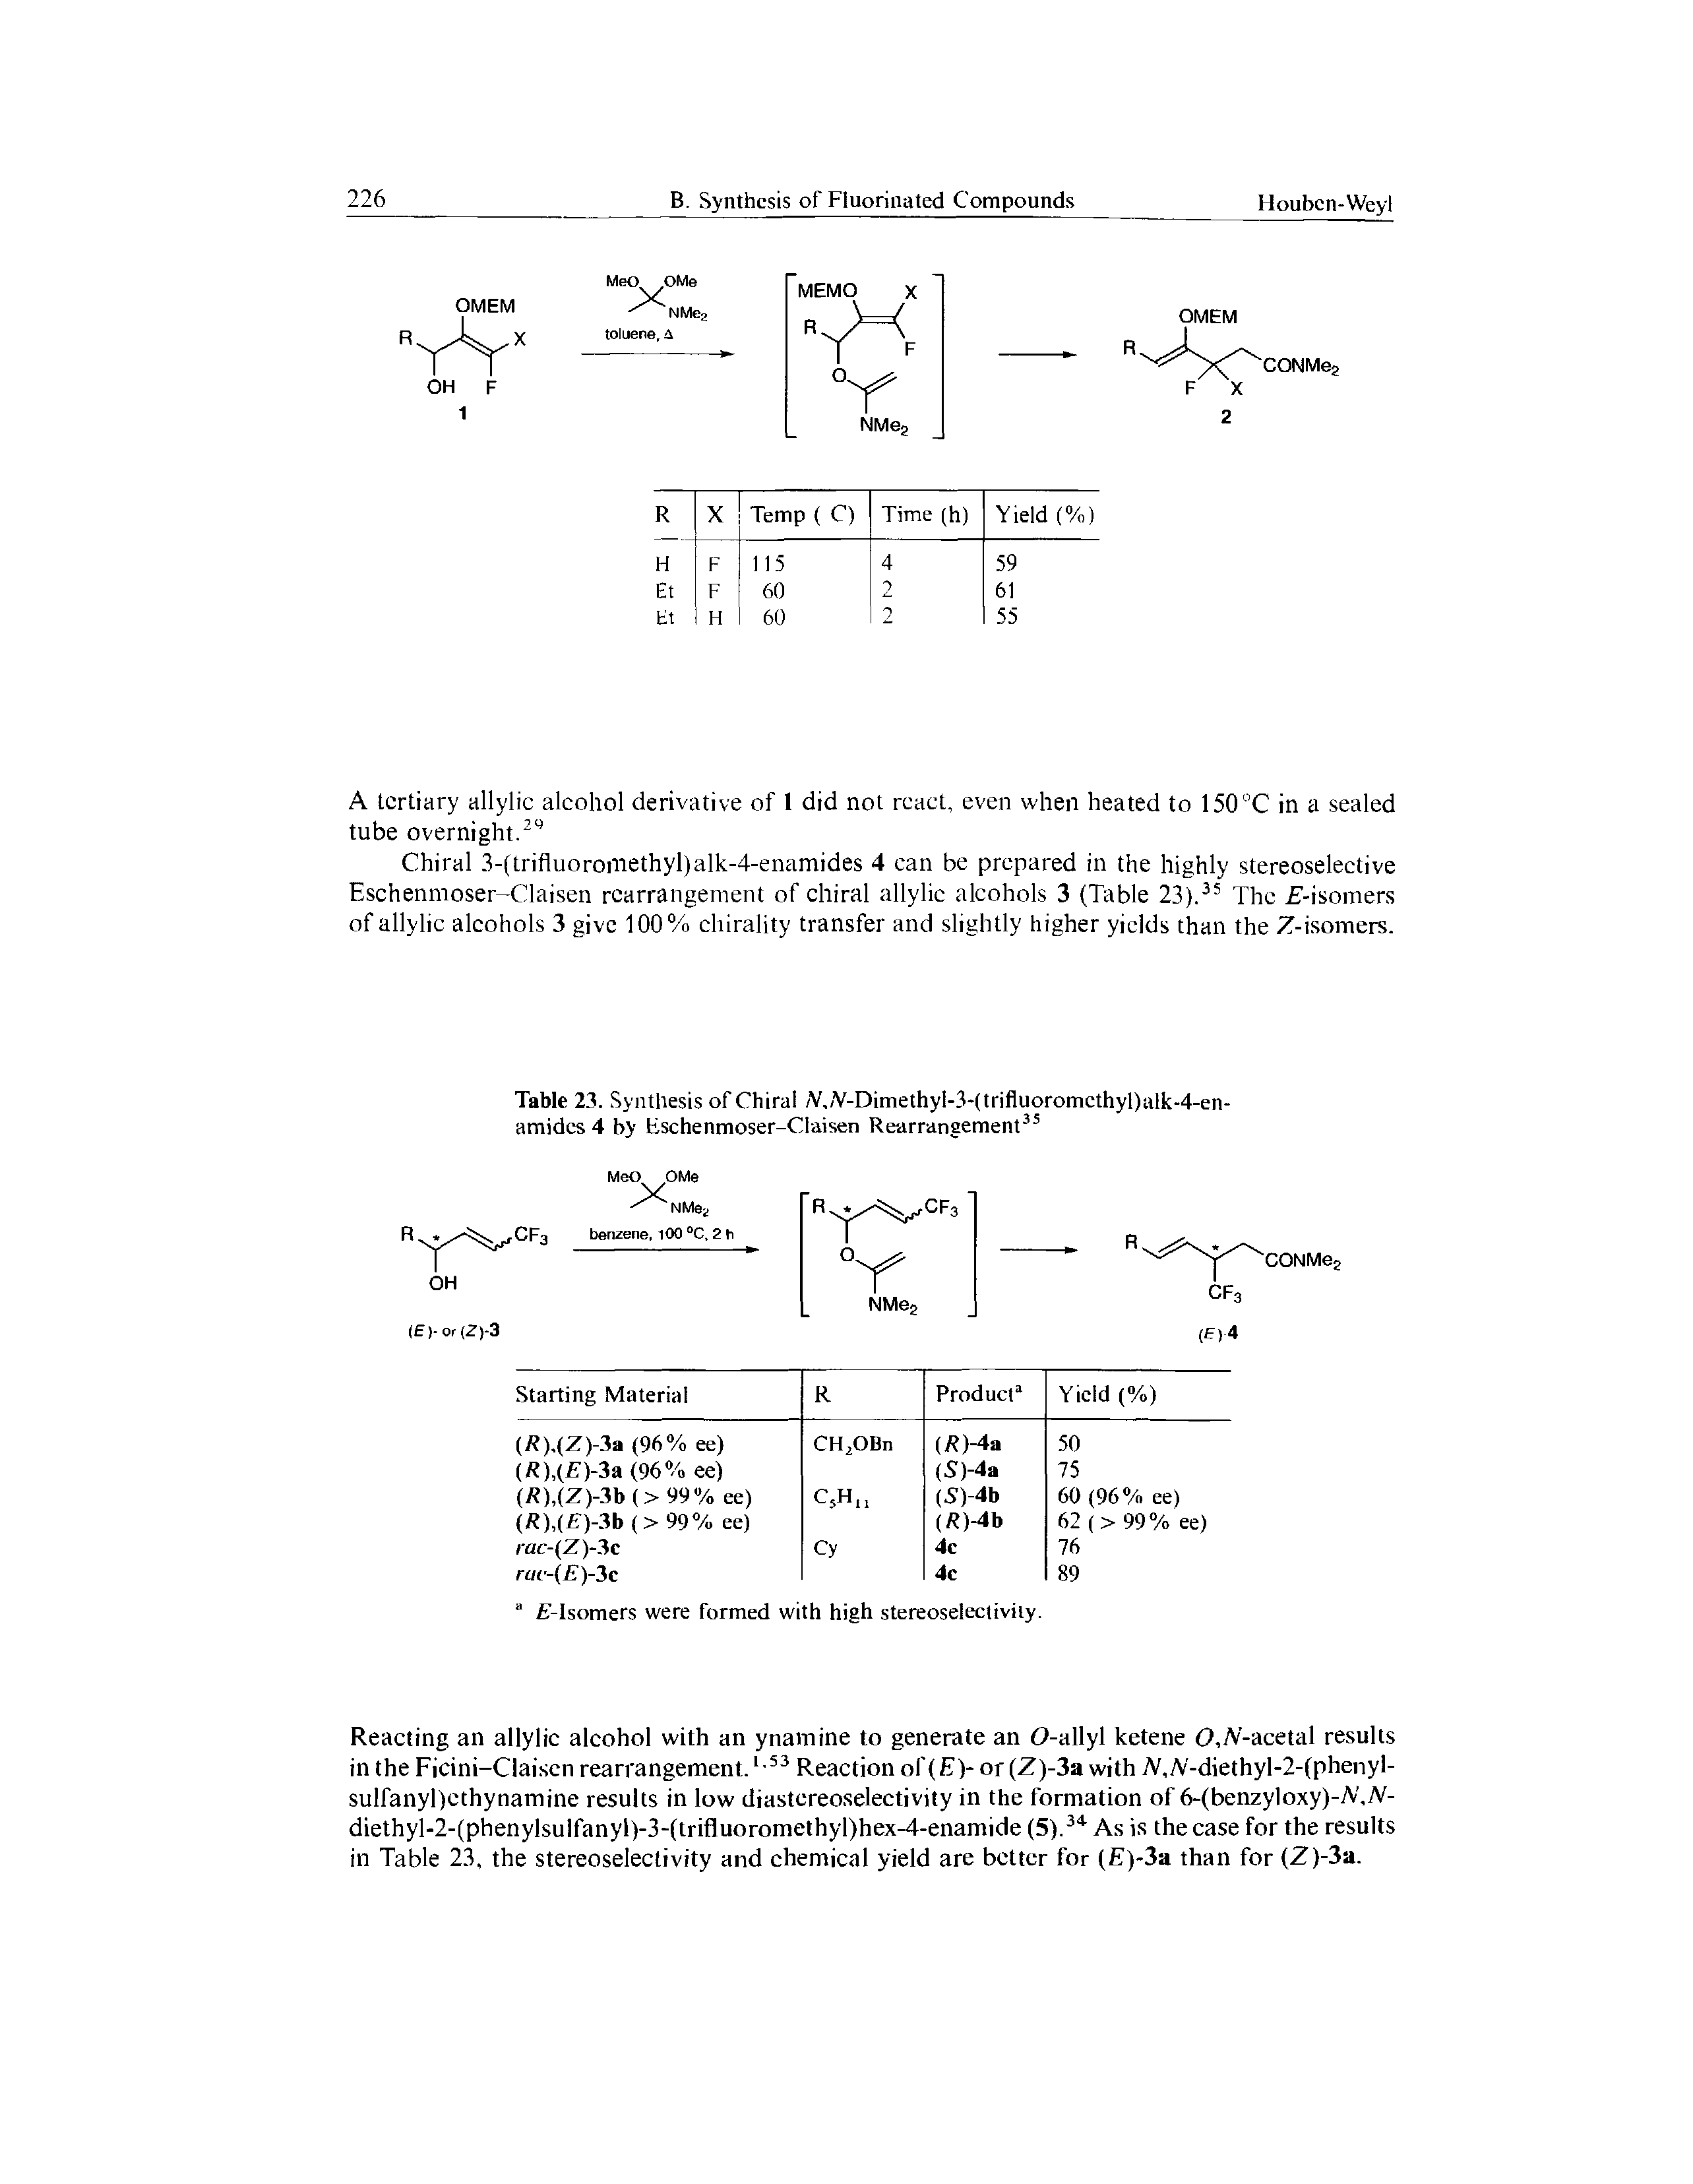 Table 23. Synthesis of Chiral /V,V-DimethyI-3-(trifluoromcthyl)alk-4-en-amidcs 4 by Eschenmoser-Claisen Rearrangement35...